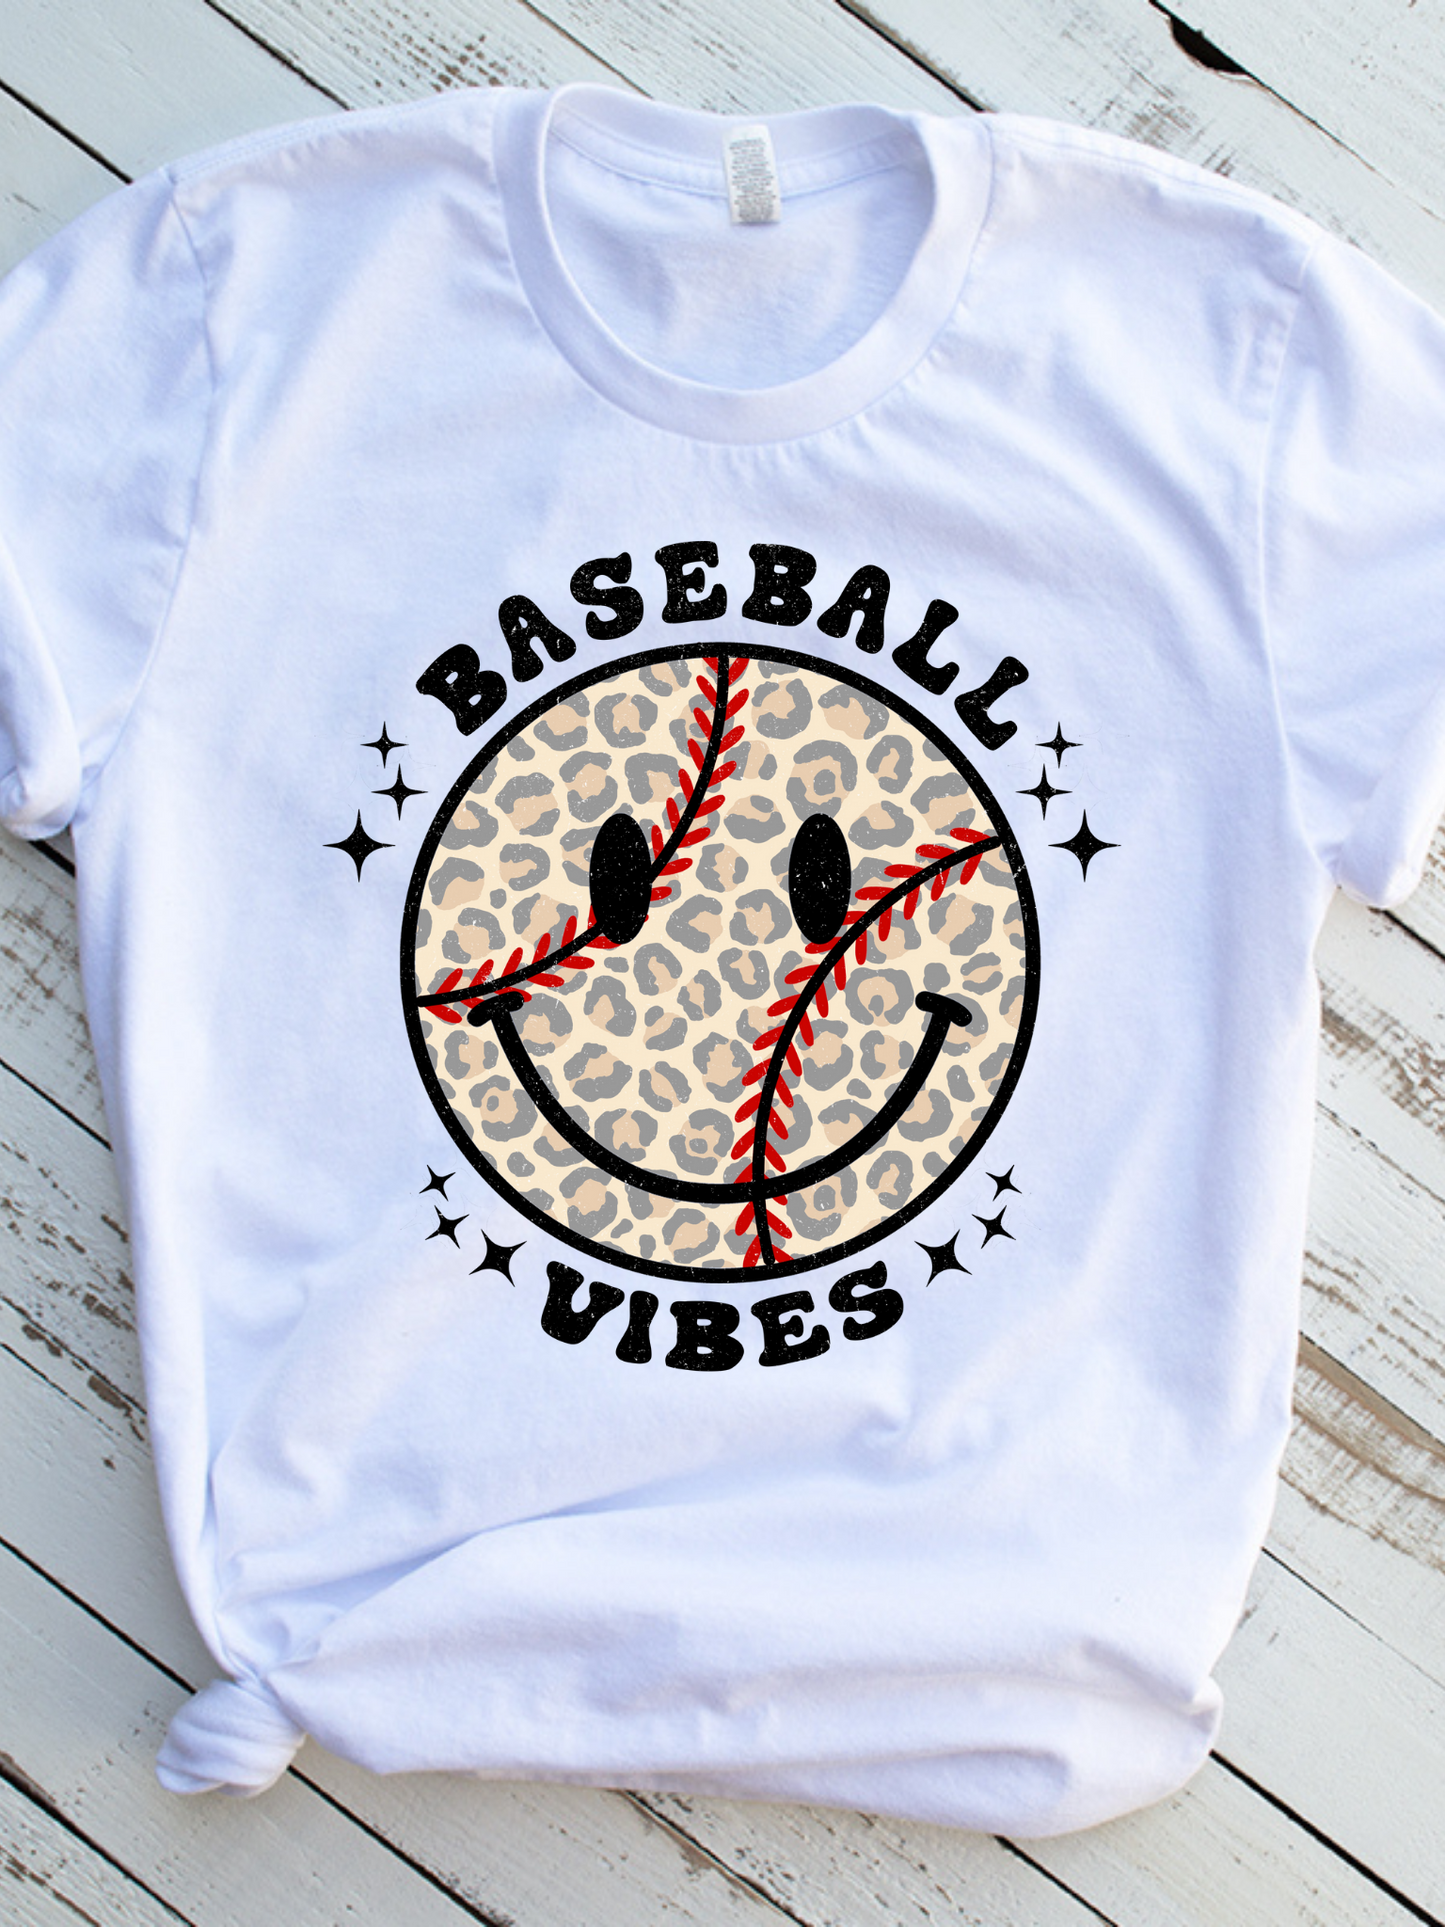 Baseball vibes